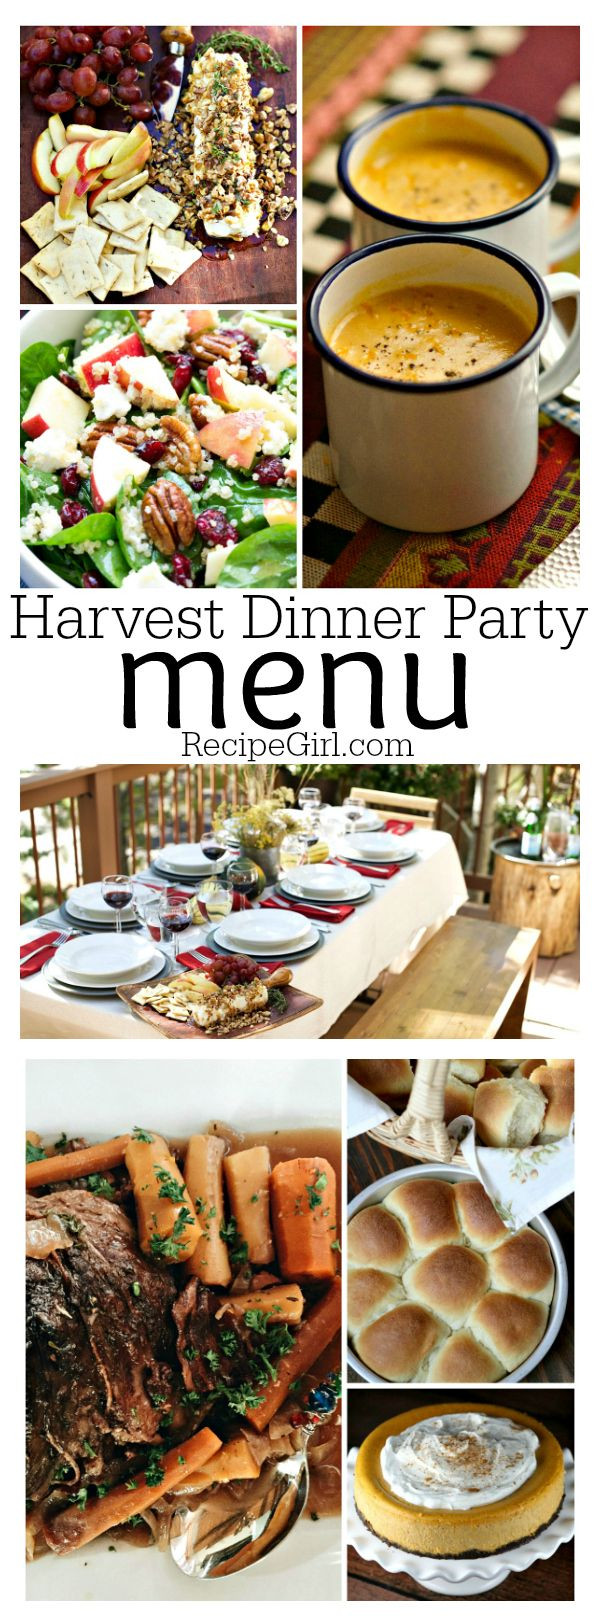 Fall Dinner Party Ideas
 25 best ideas about Fall Dinner Parties on Pinterest